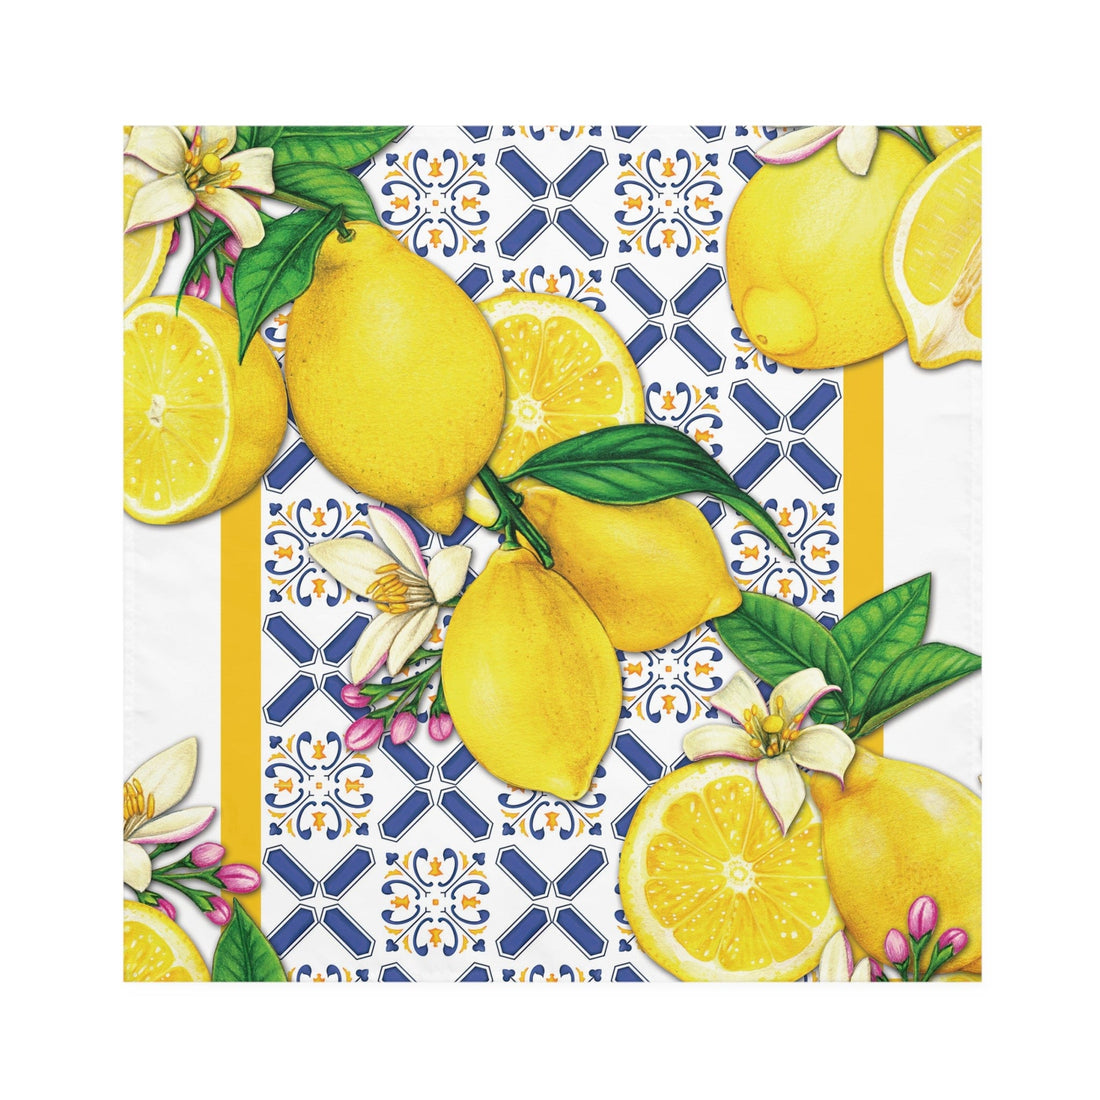 Kate McEnroe New York Set of 4 Cobalt Blue and Yellow Cloth Napkins, Lemon &amp; Tiles Design, Mediterranean Floral Dining Table Linens, Fall Home Decor, Hostess GiftNapkins26542376096425552686